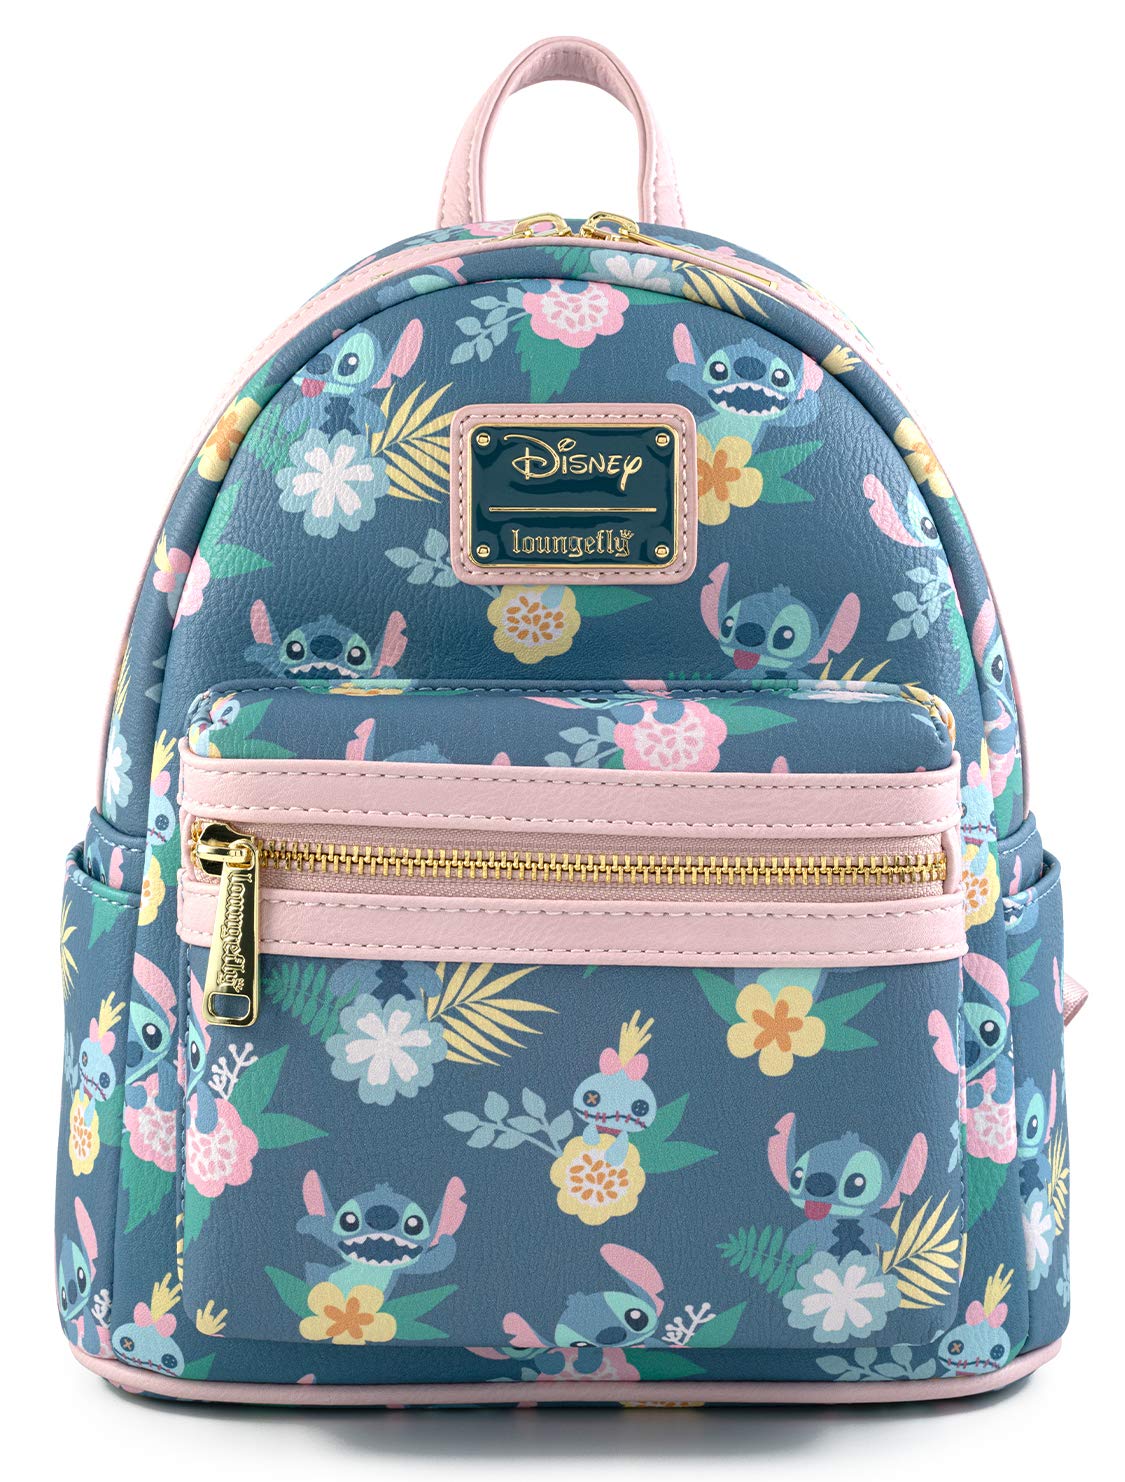 Loungefly Disney Stitch Lilo & Stitch All Over Print Womens Double Strap Shoulder Bag Purse Multi